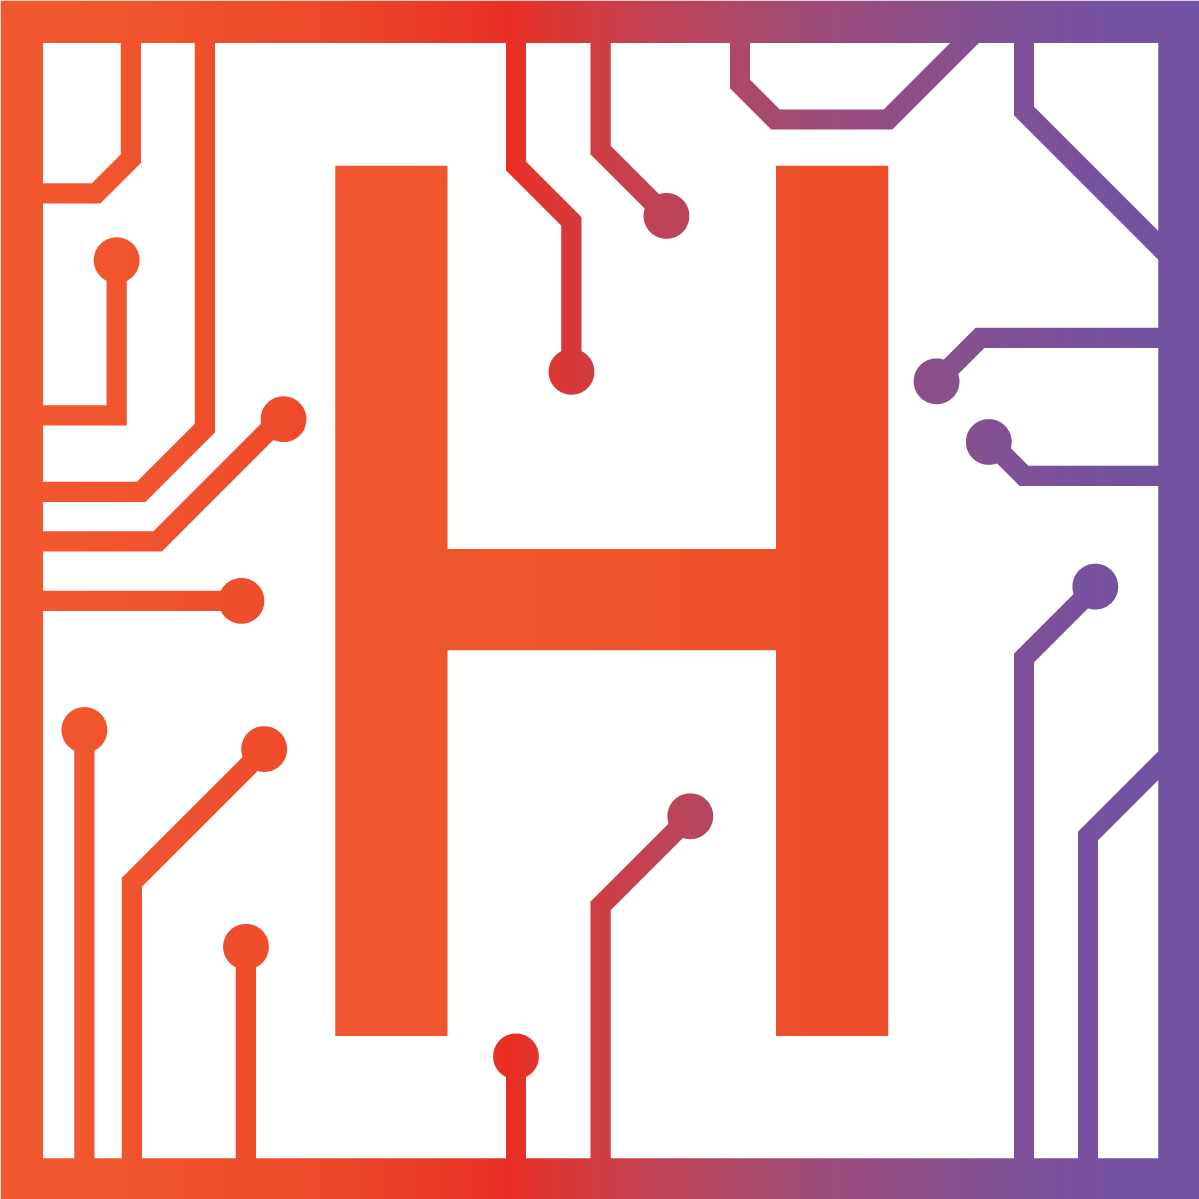 Hacs square logo